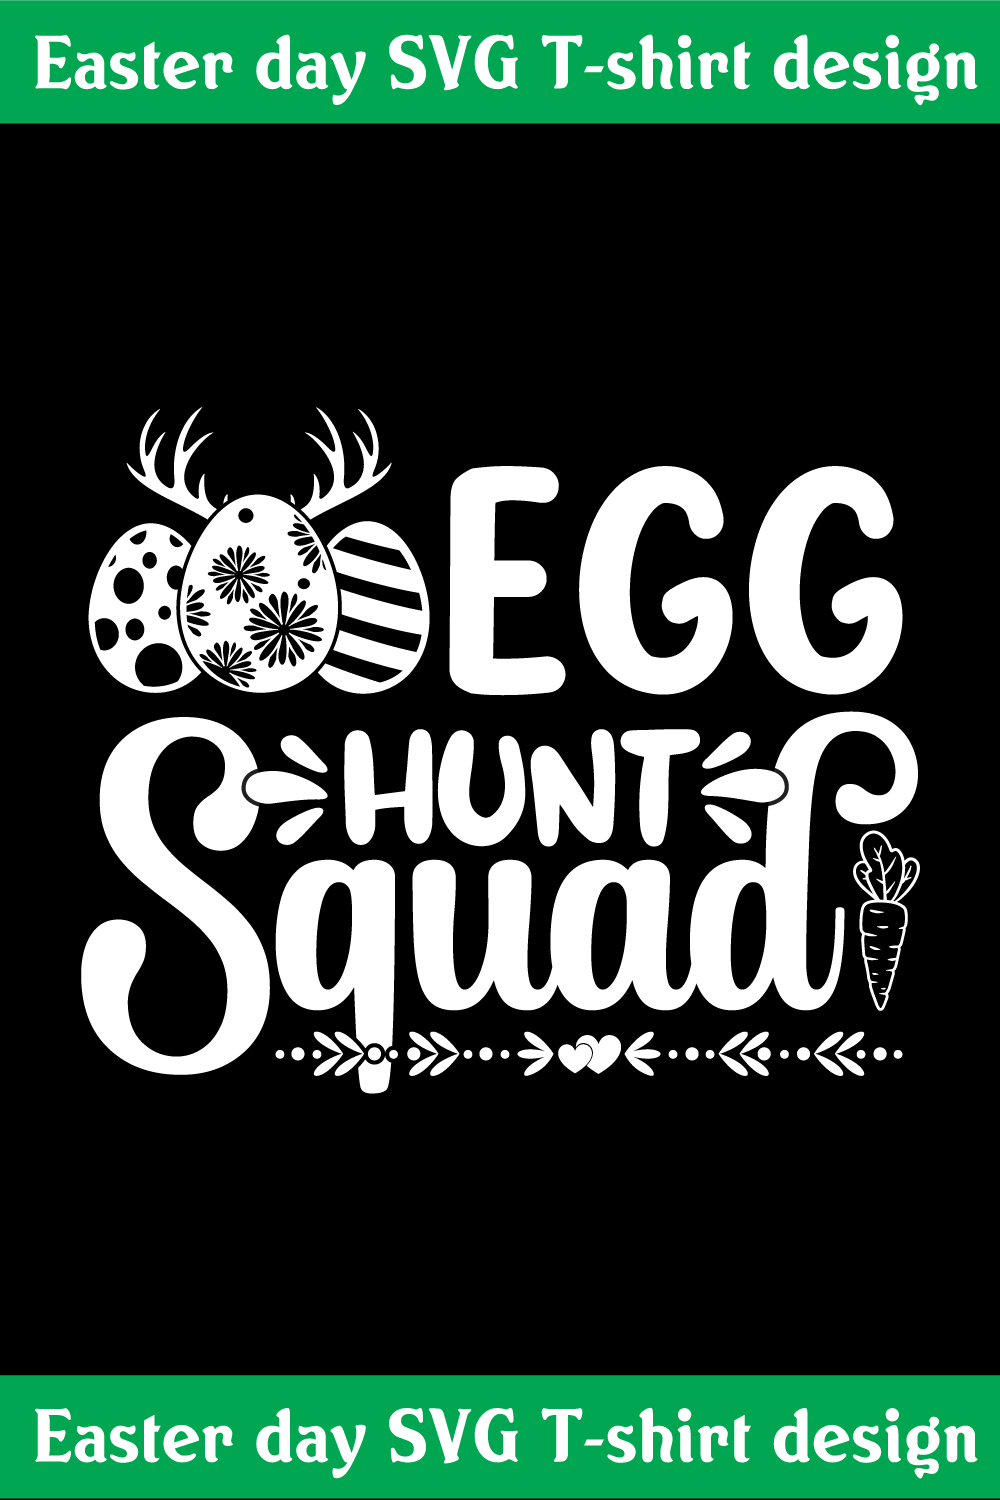 Egg hunt Squad T shirt design pinterest preview image.